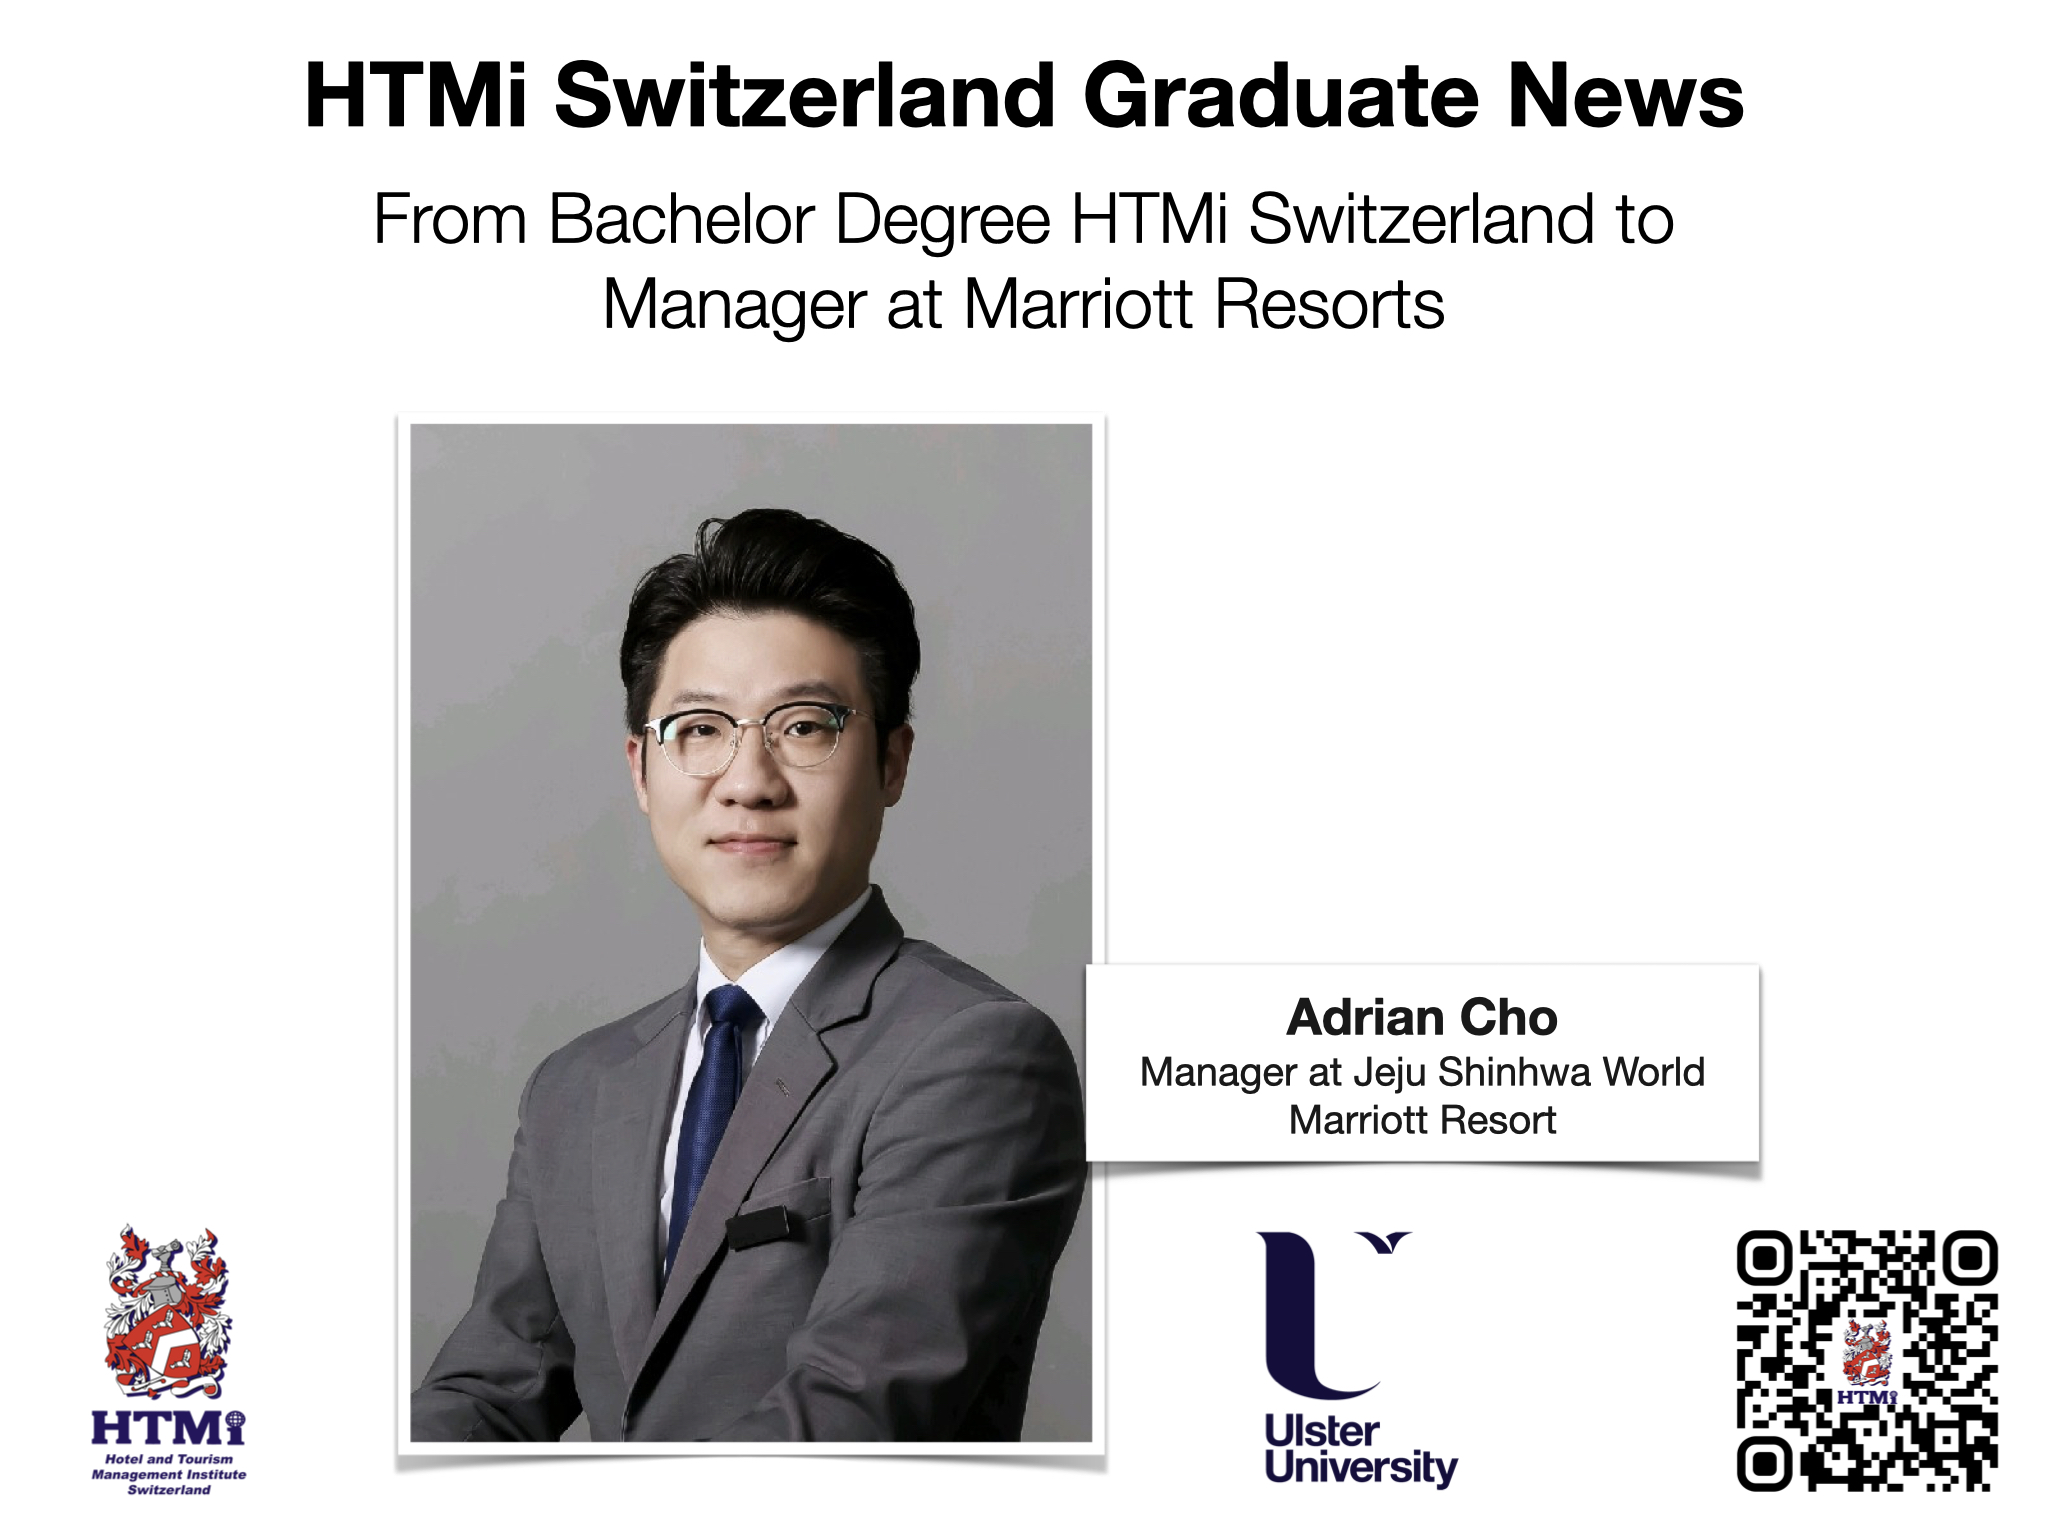 Adrian Cho - From Bachelor Degree HTMi Switzerland to Manager at Marriott Resorts - HTMi Switzerland Graduate News